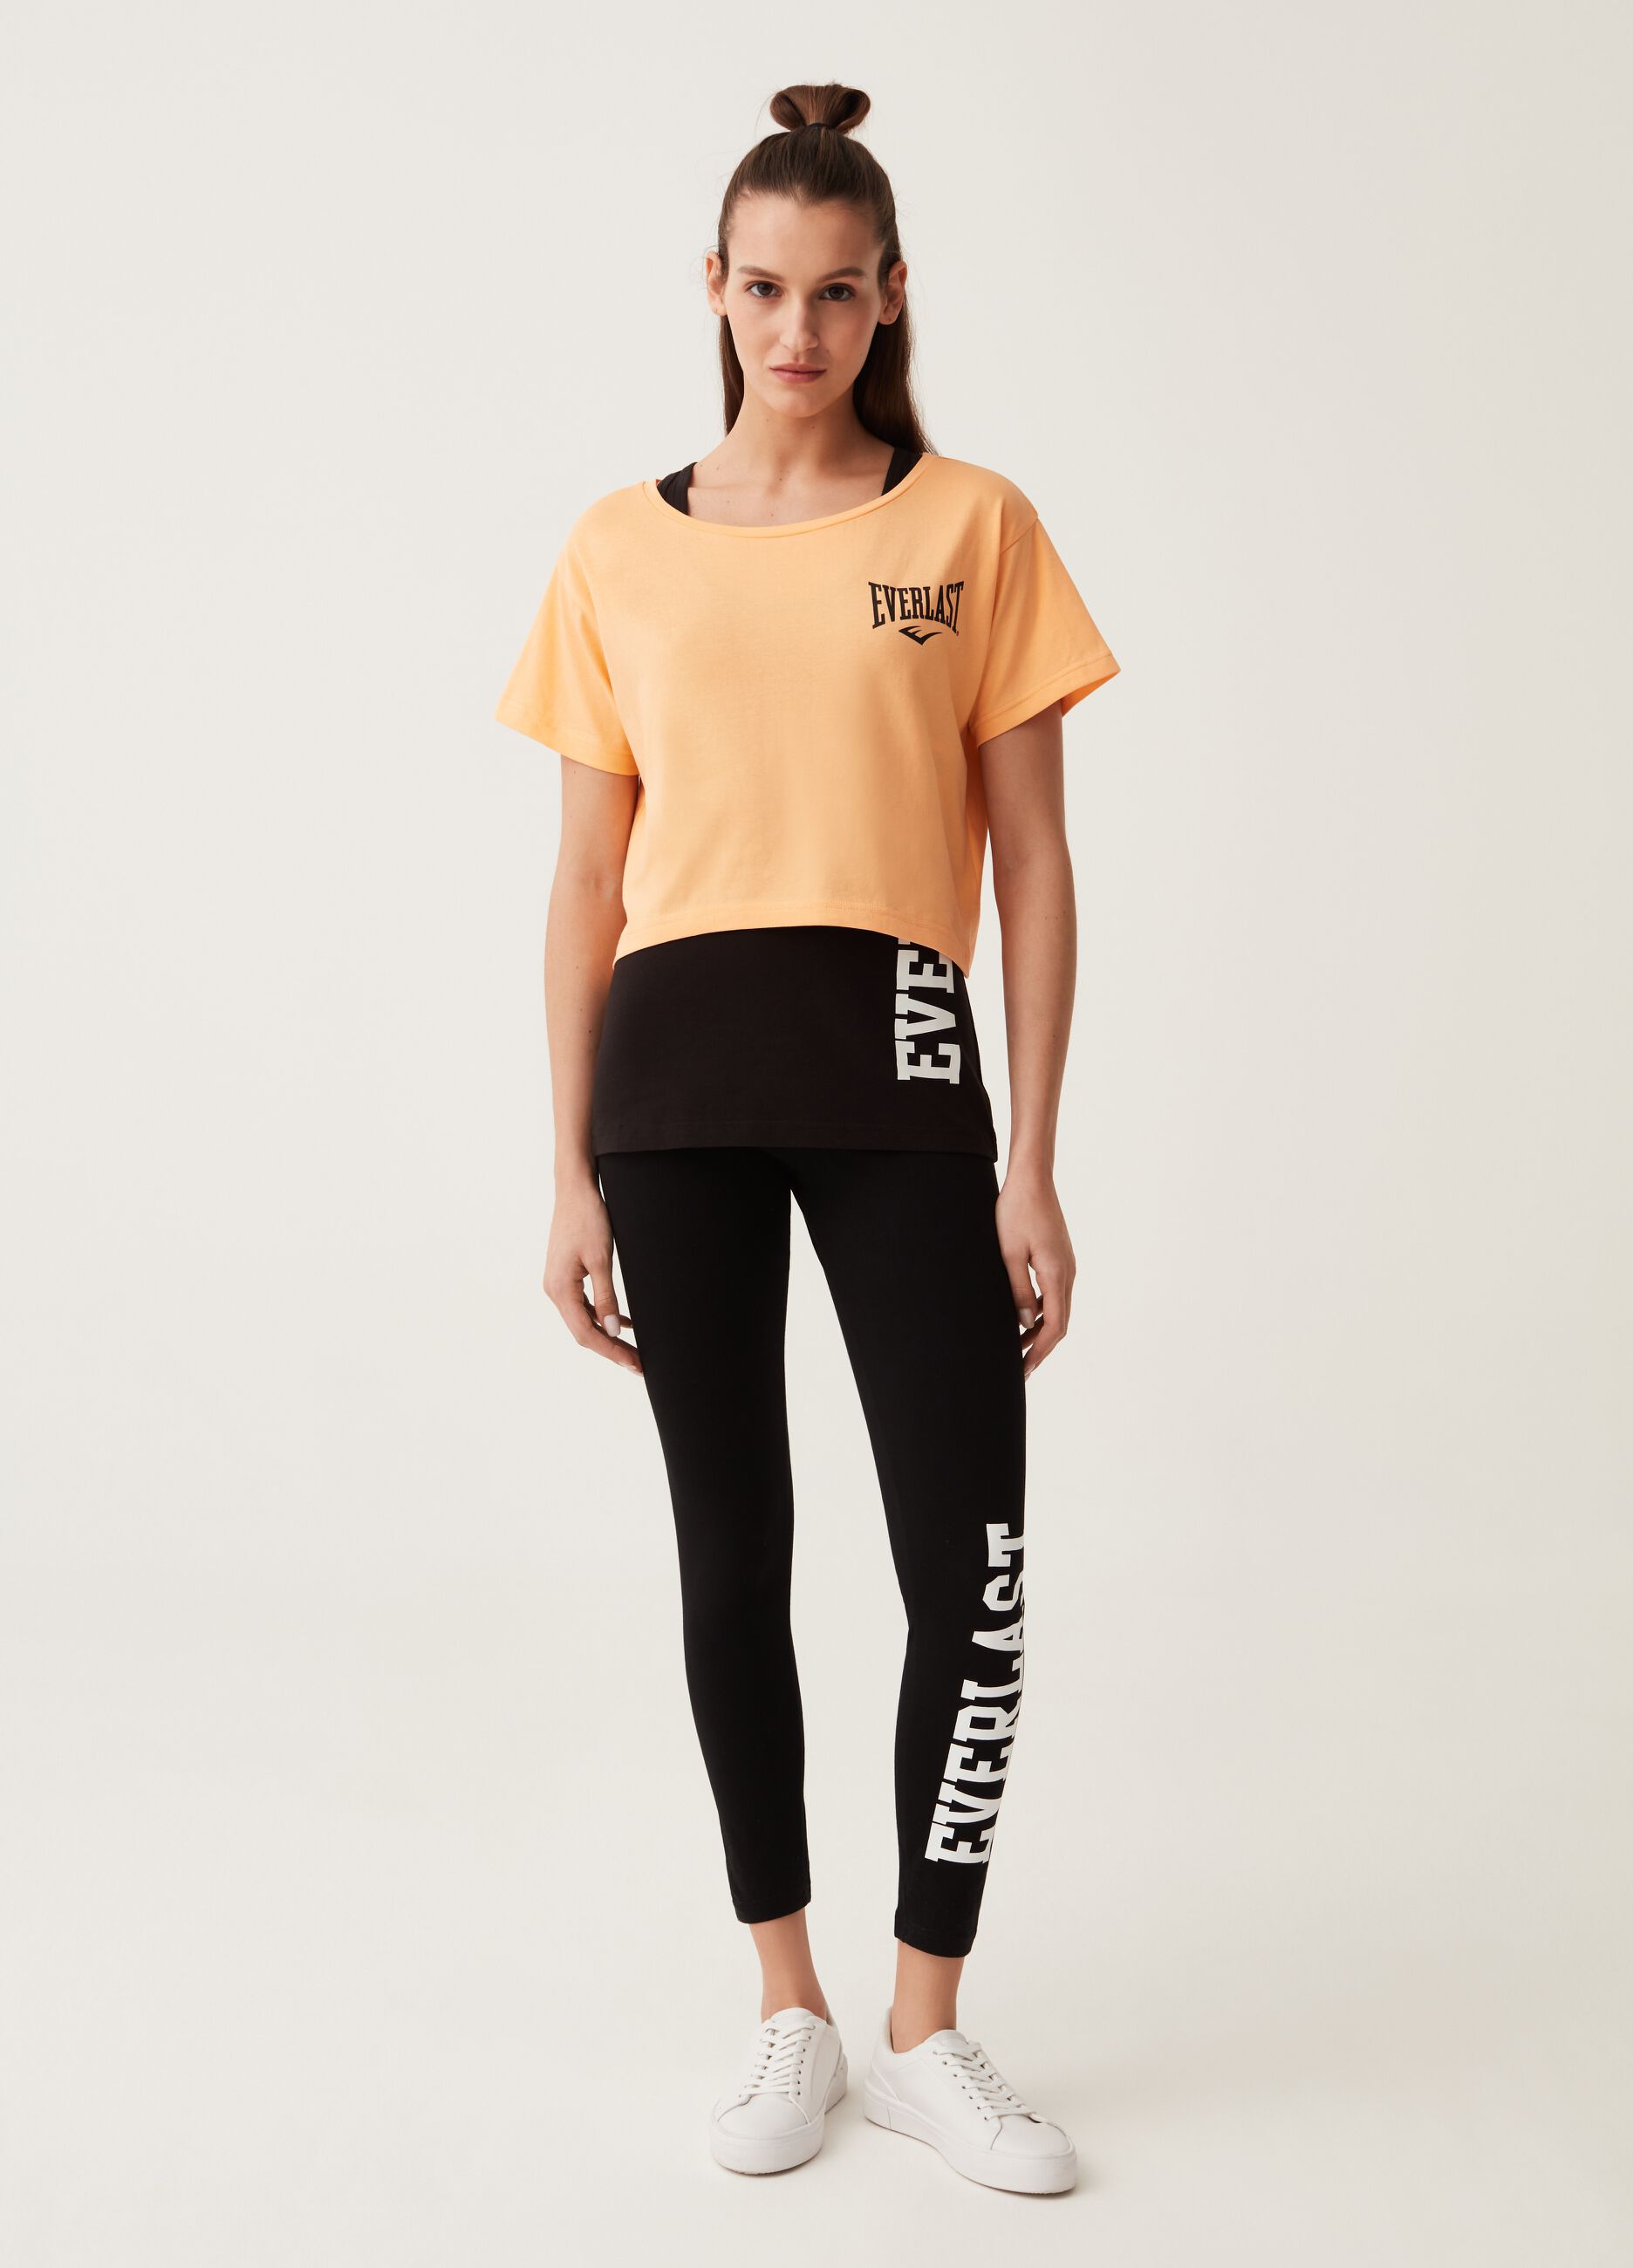 EVERLAST Woman's Orange/Black Stretch cotton leggings with